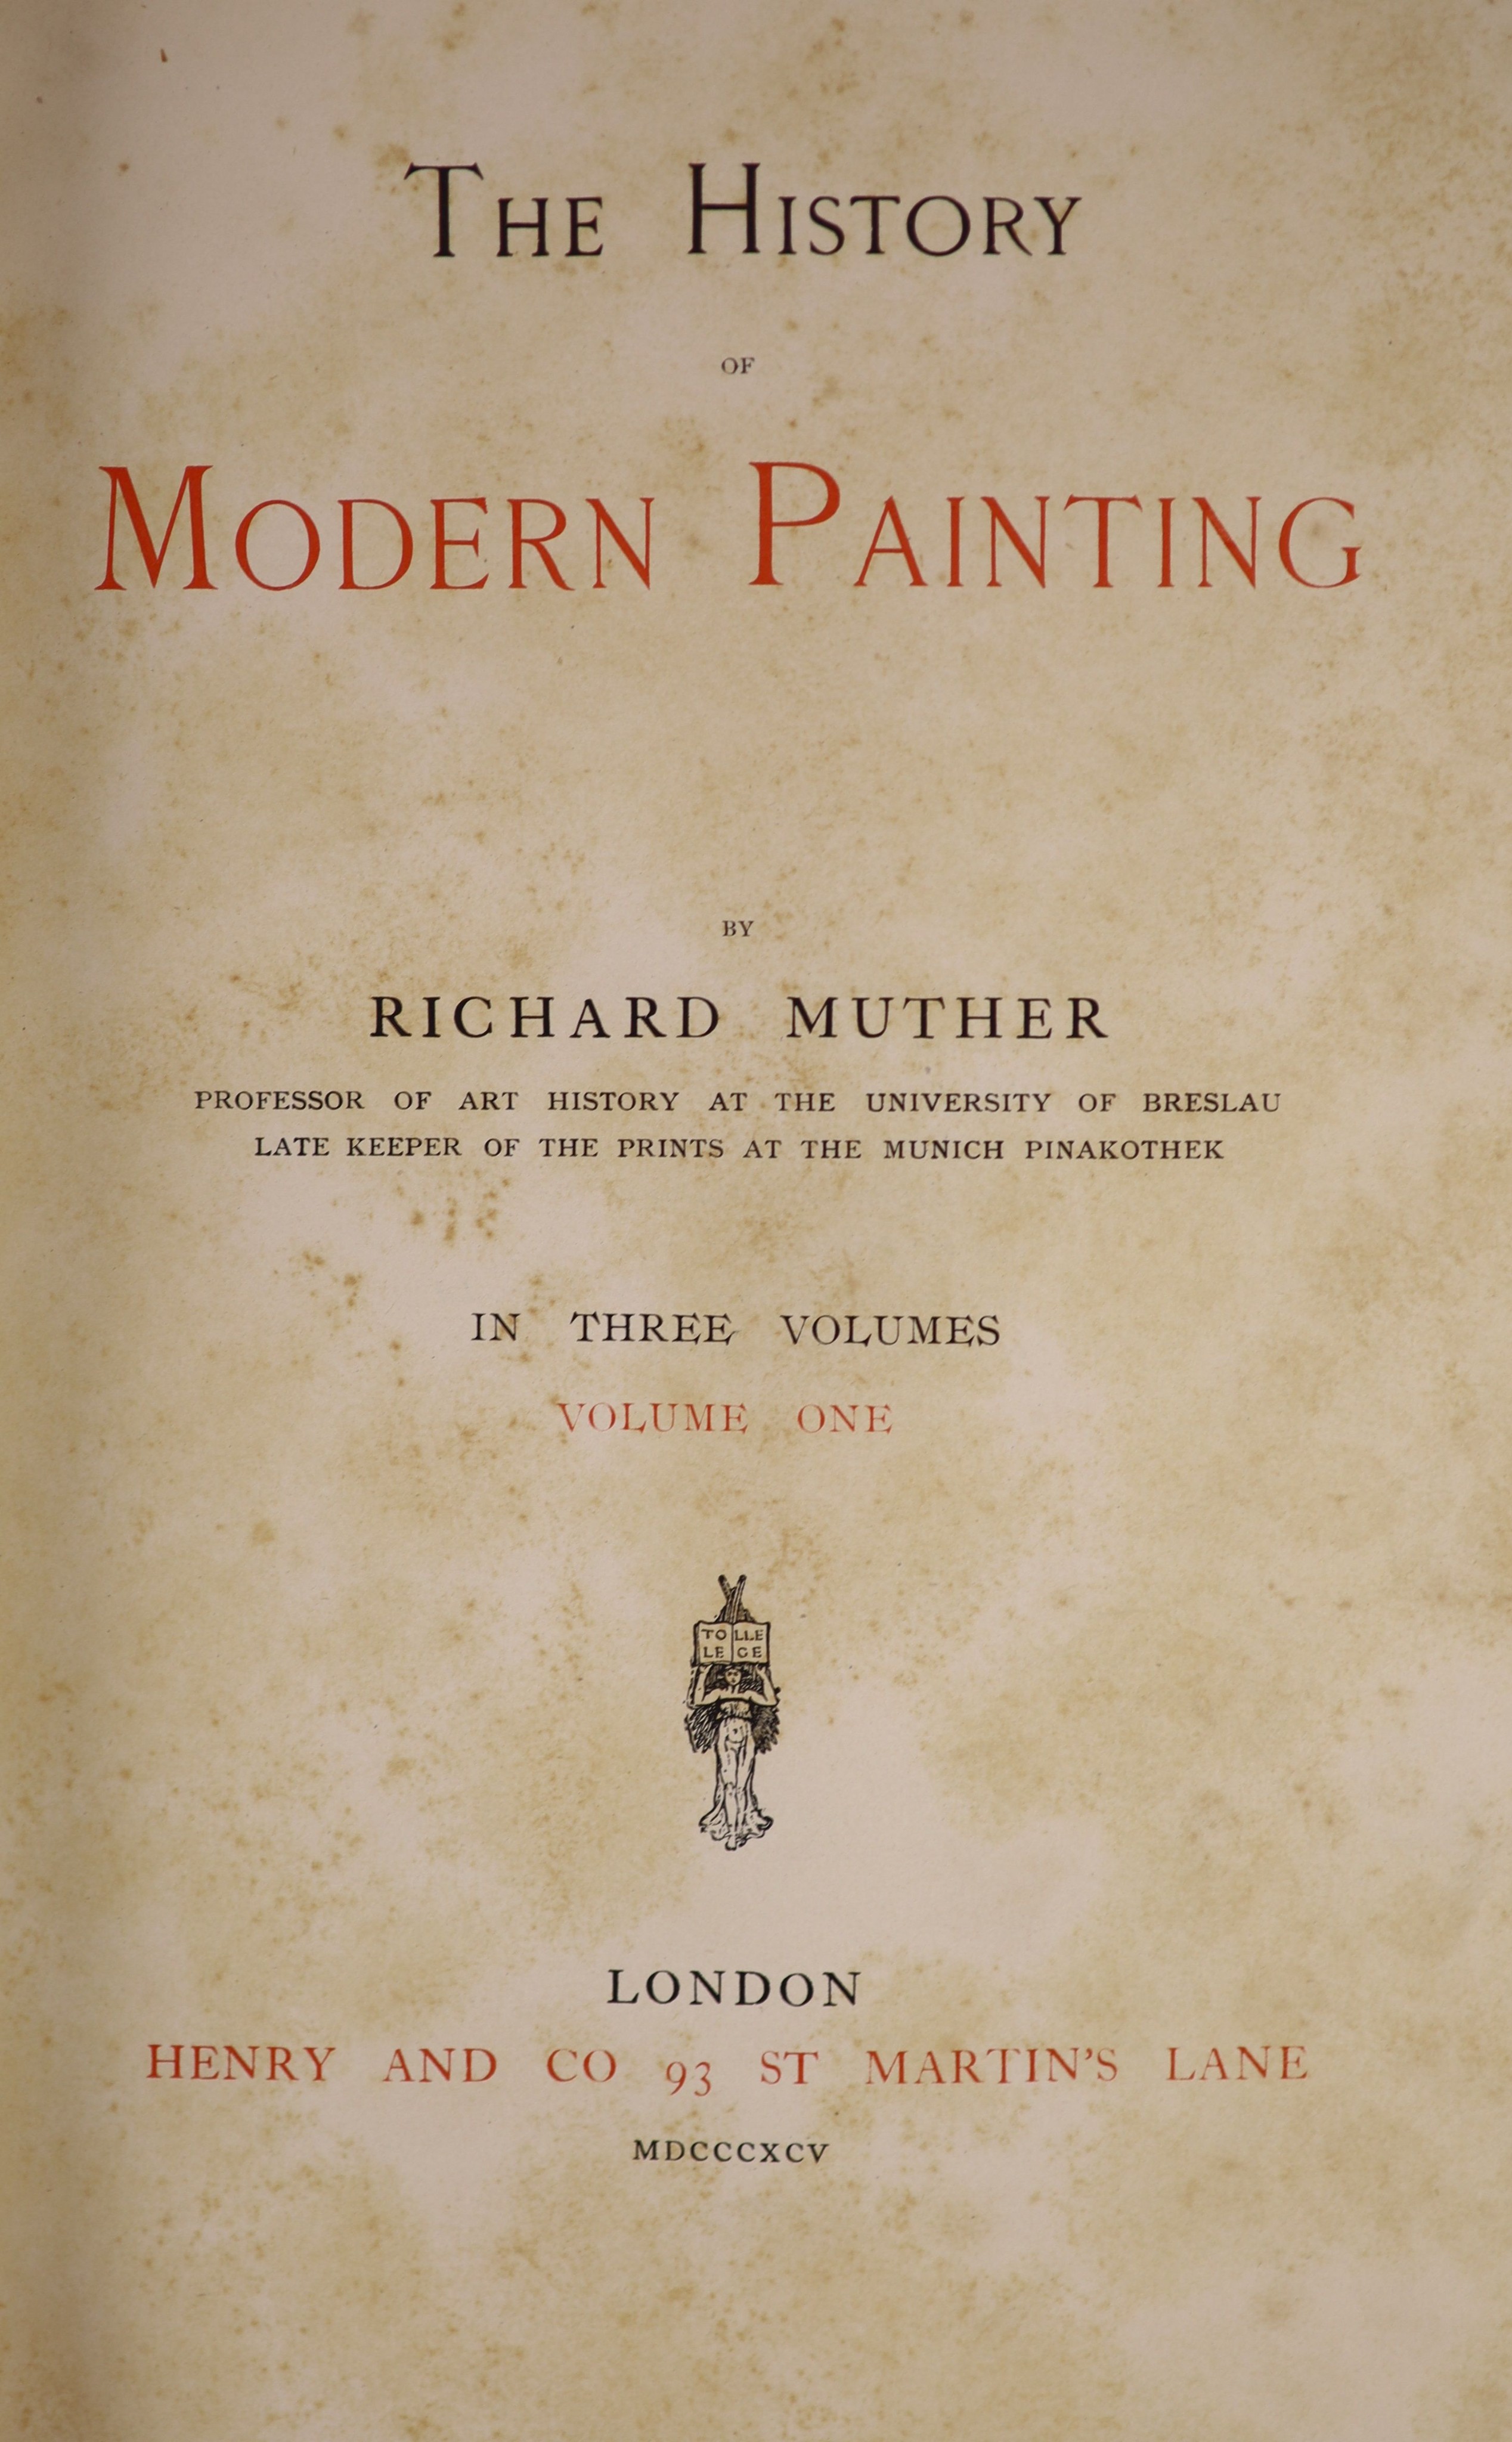 Mutter, Richard - The History of Modern Painting, 3 vols, qto, half calf, London, 1895-96